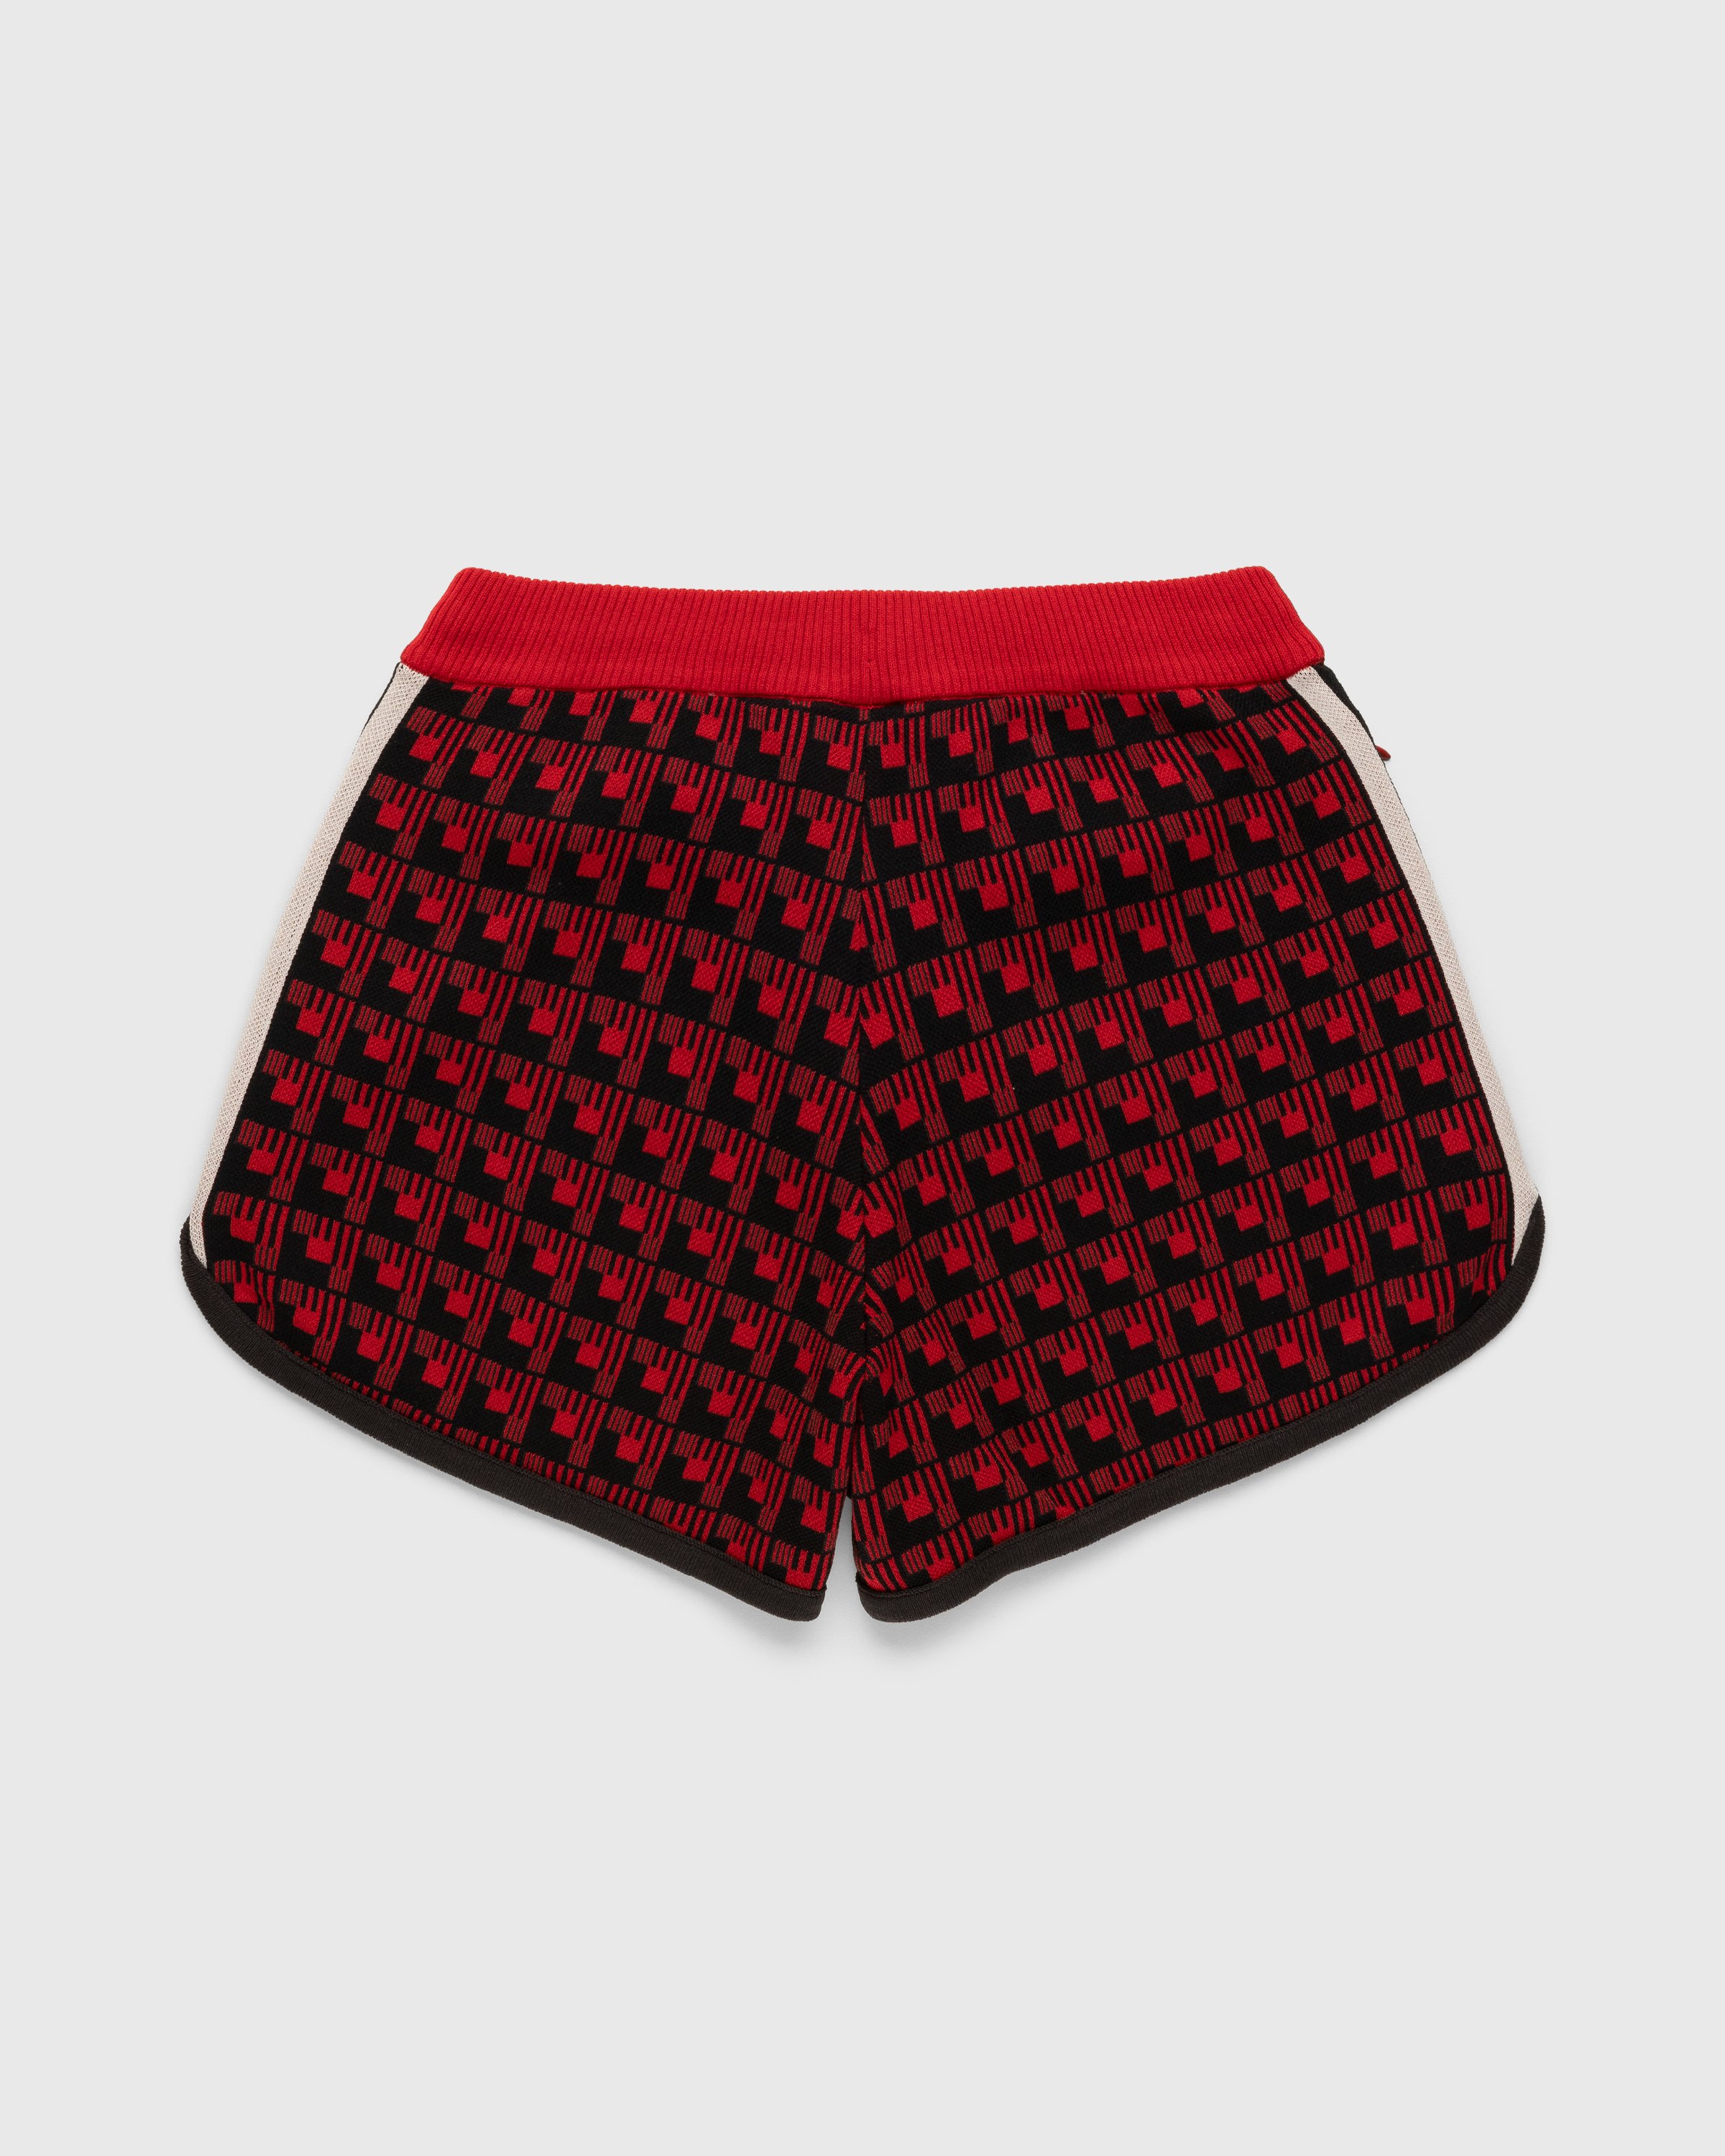 Adidas x Wales Bonner - WB Knit Shorts Scarlet/Black - Clothing - Red - Image 2